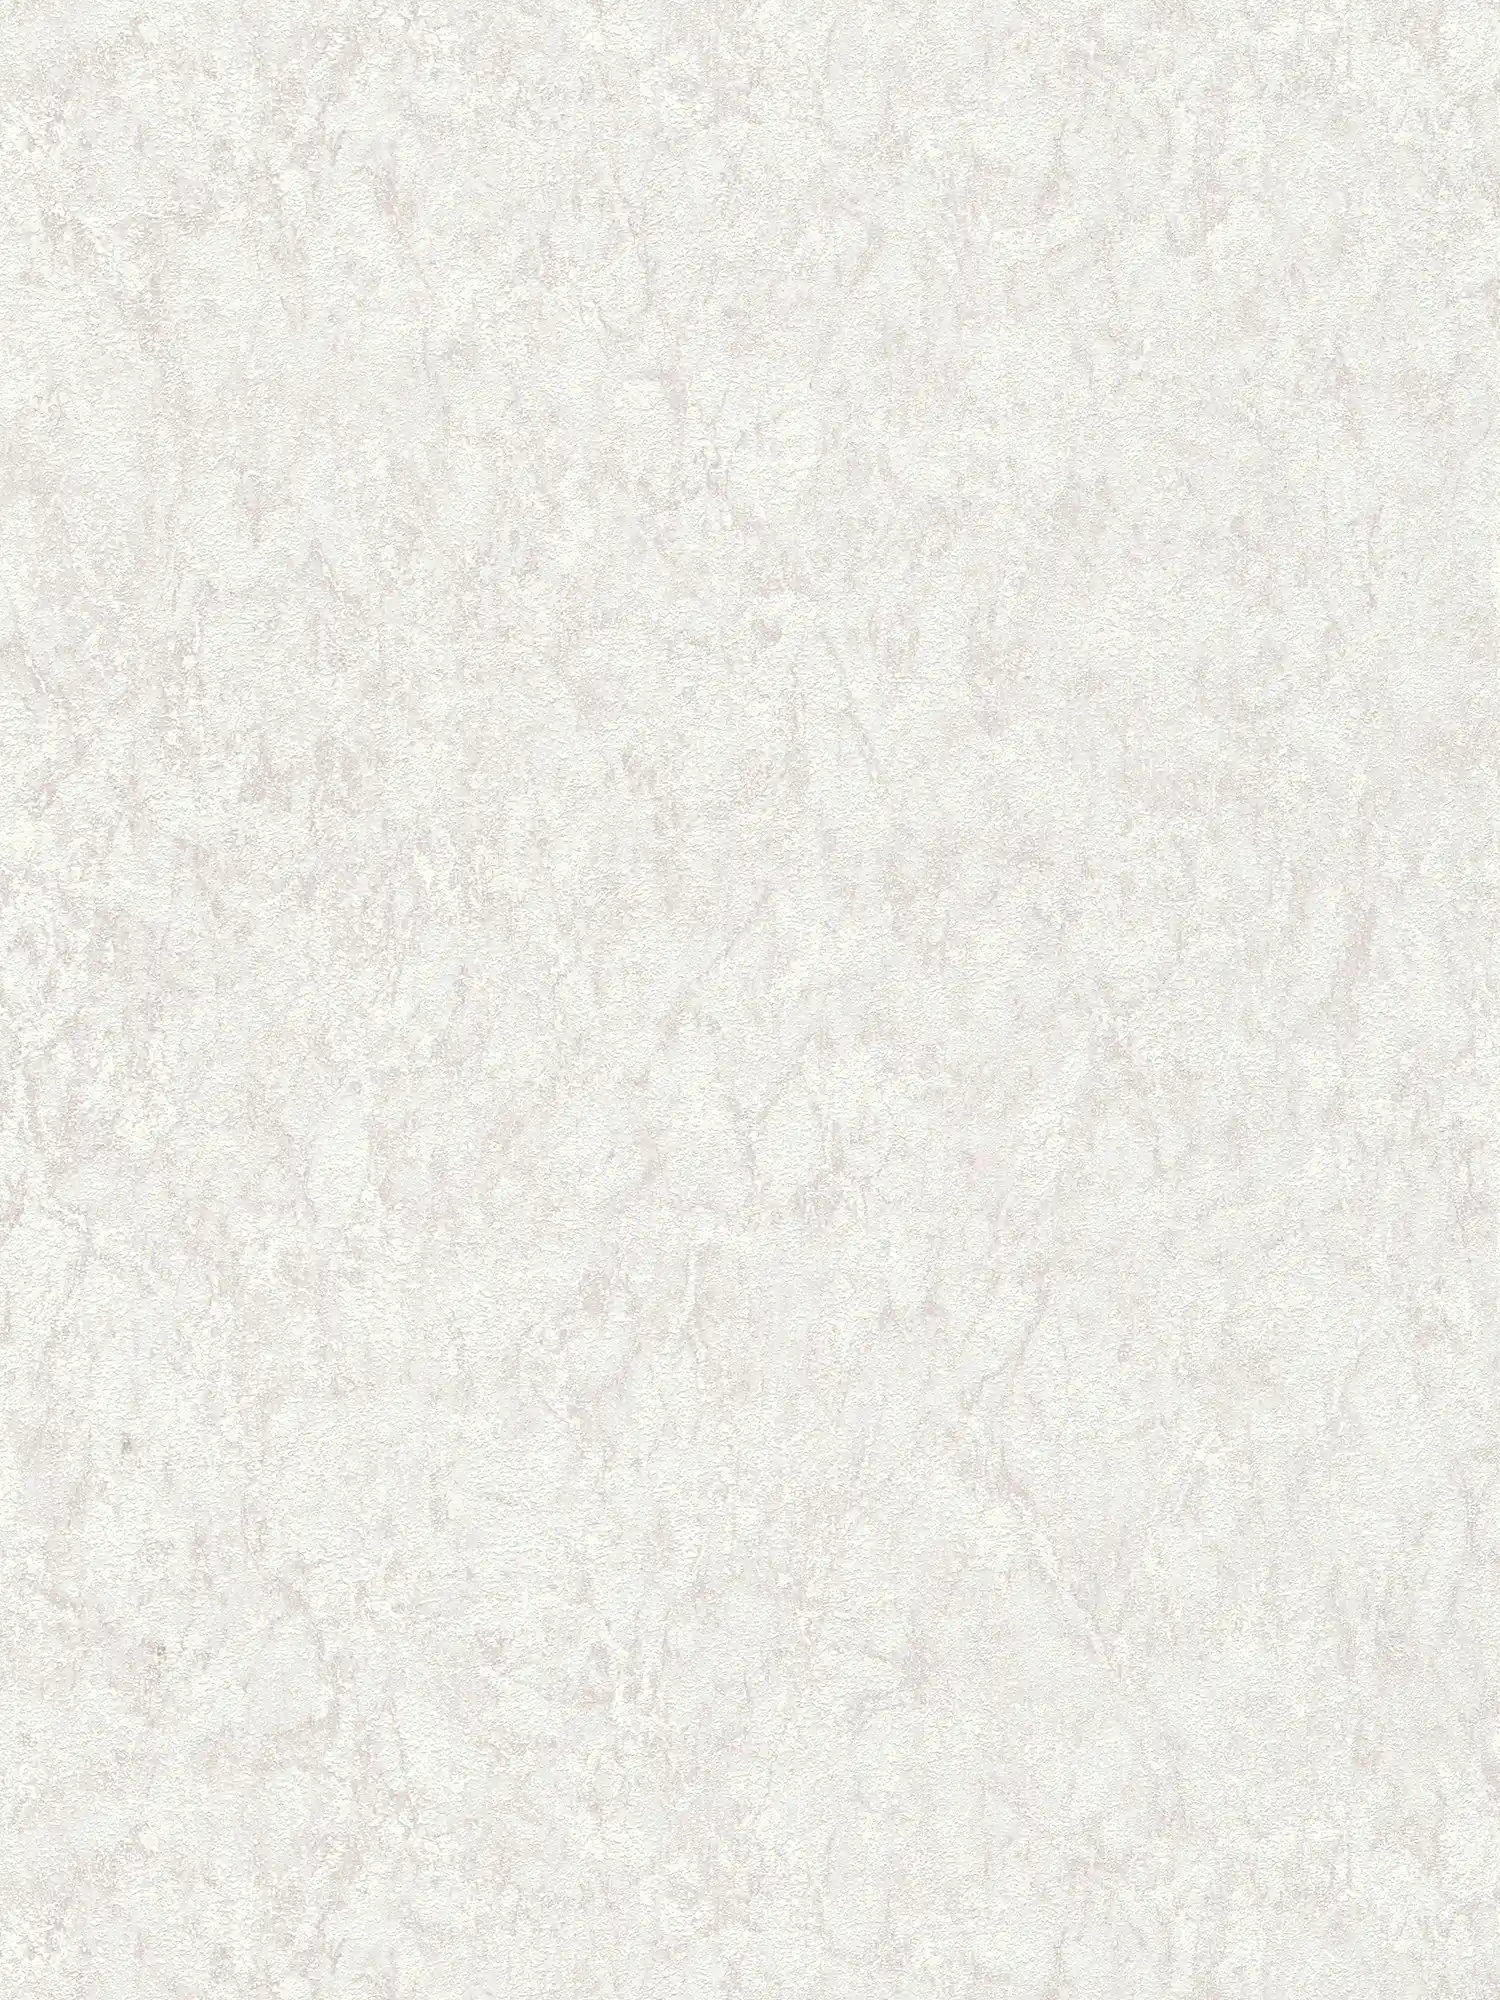 Plain wallpaper with texture effect & mottled design - grey, beige, cream
